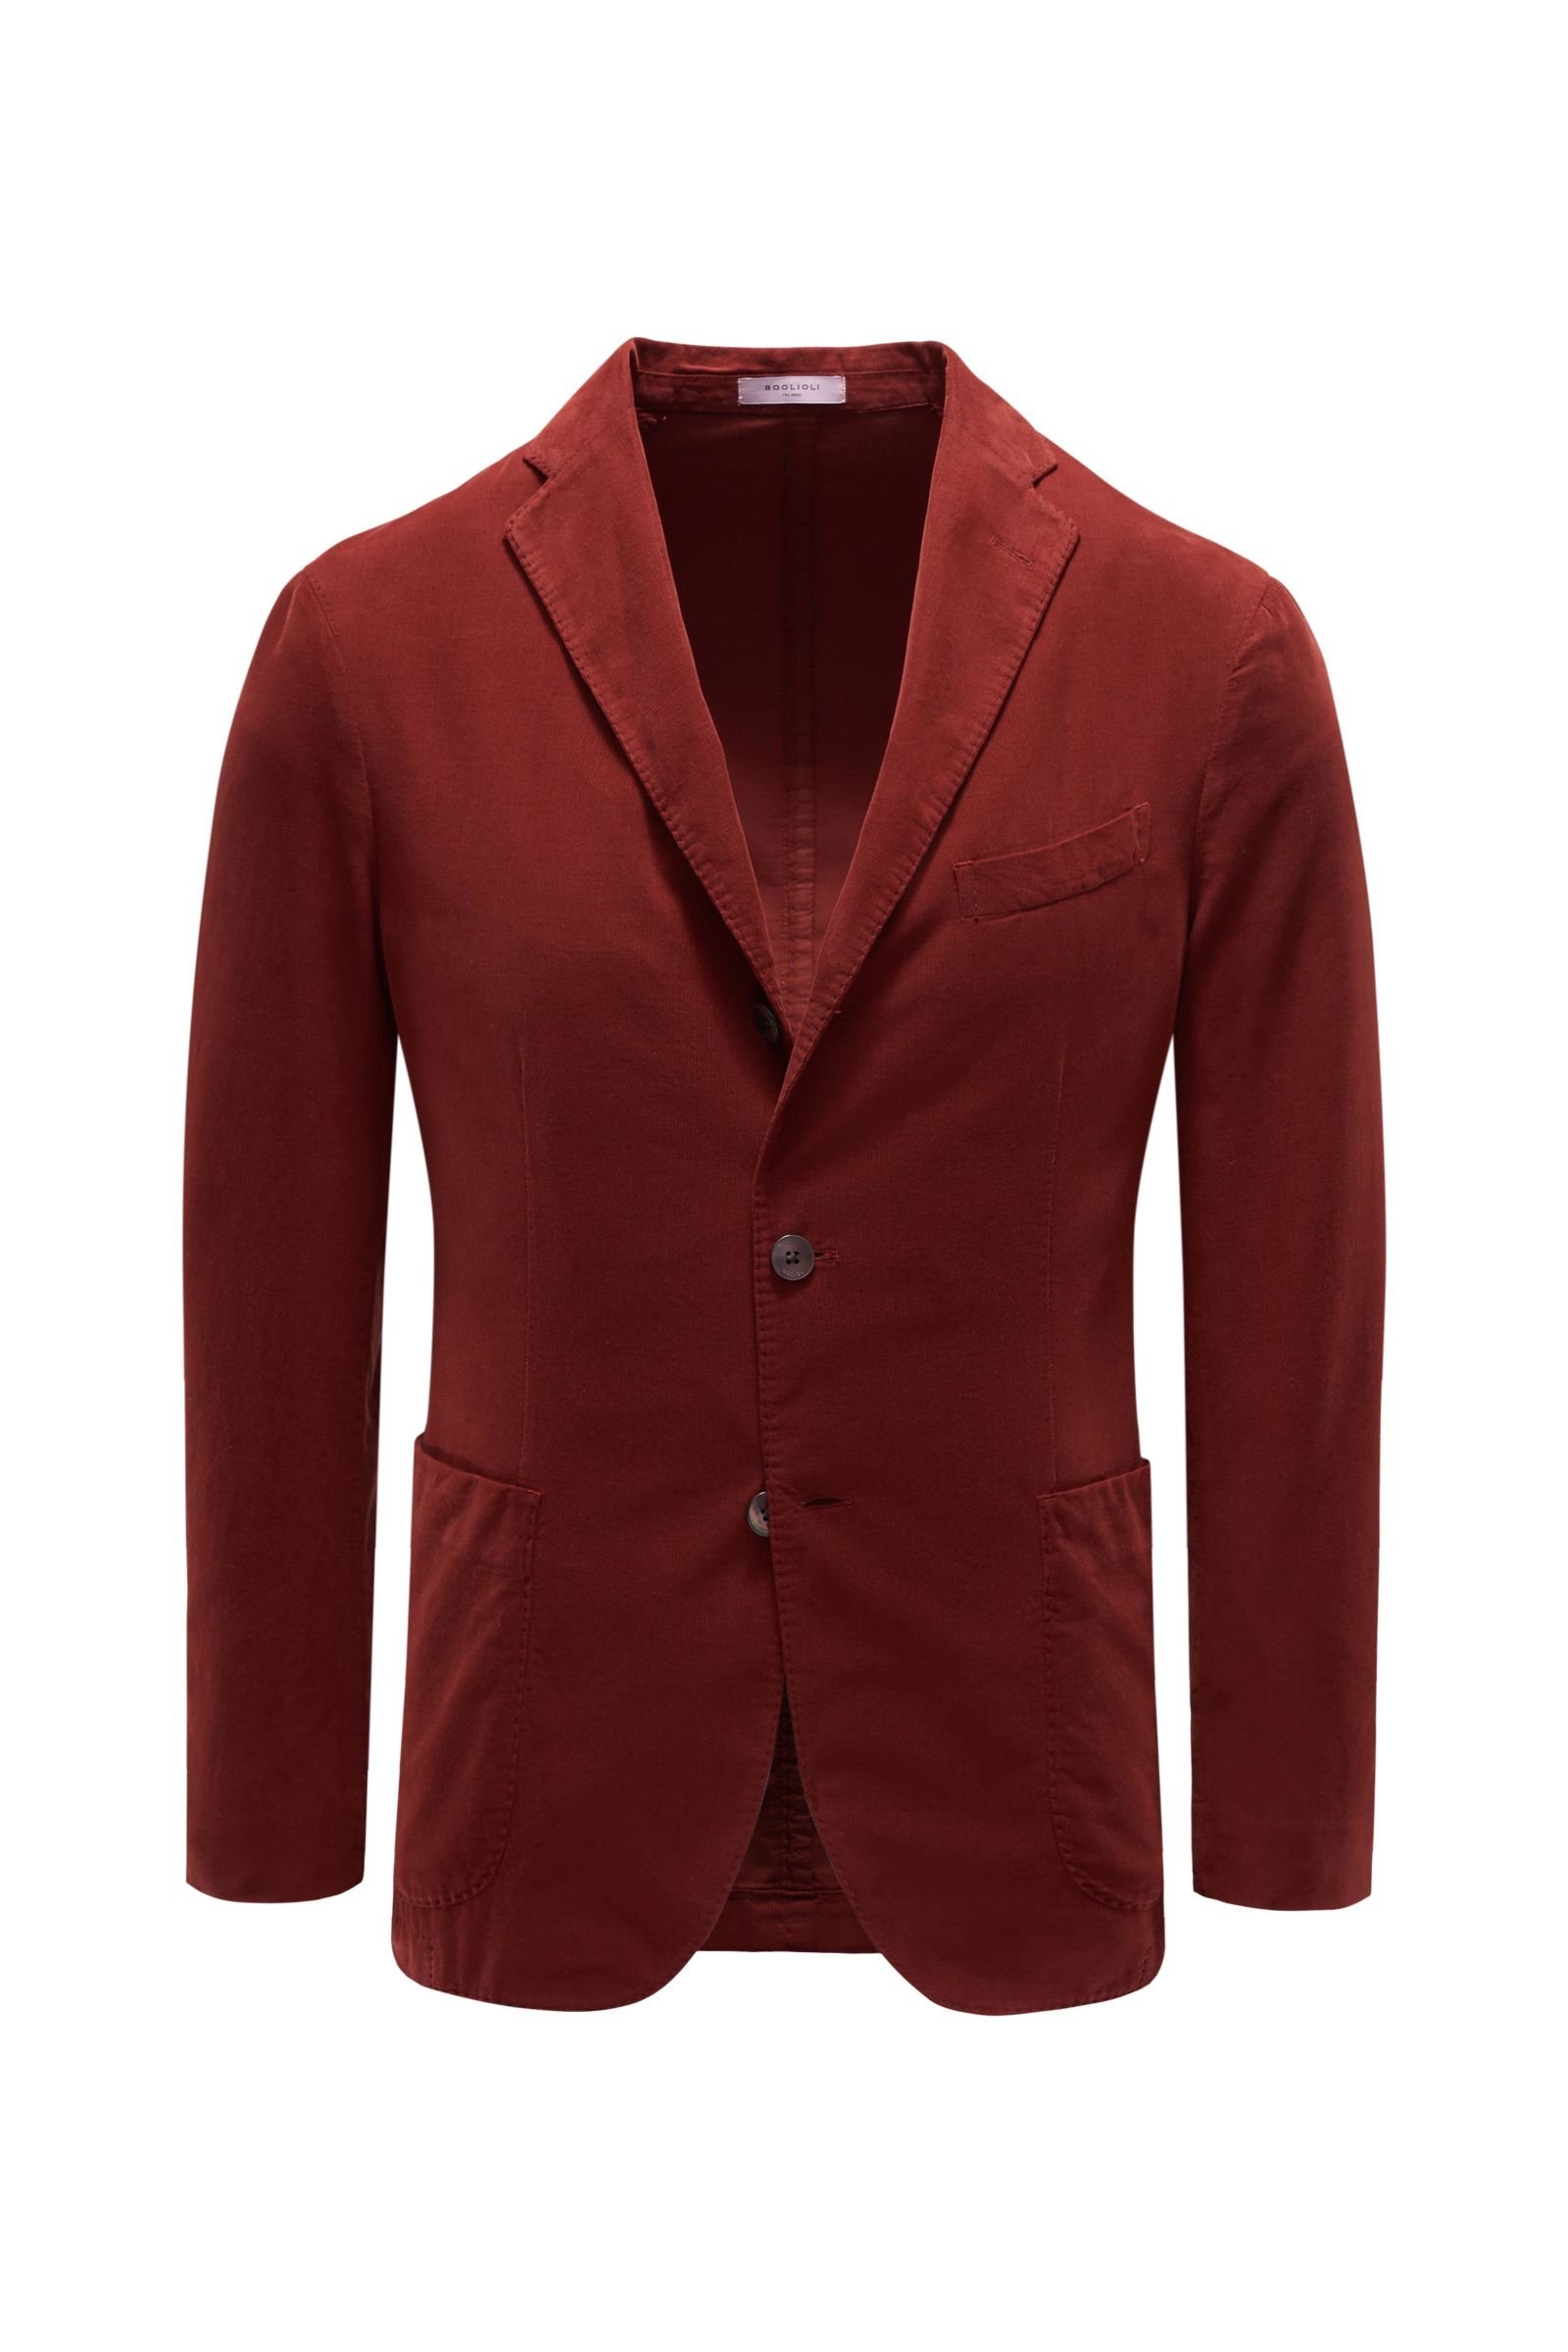 Corduroy smart-casual jacket rust brown